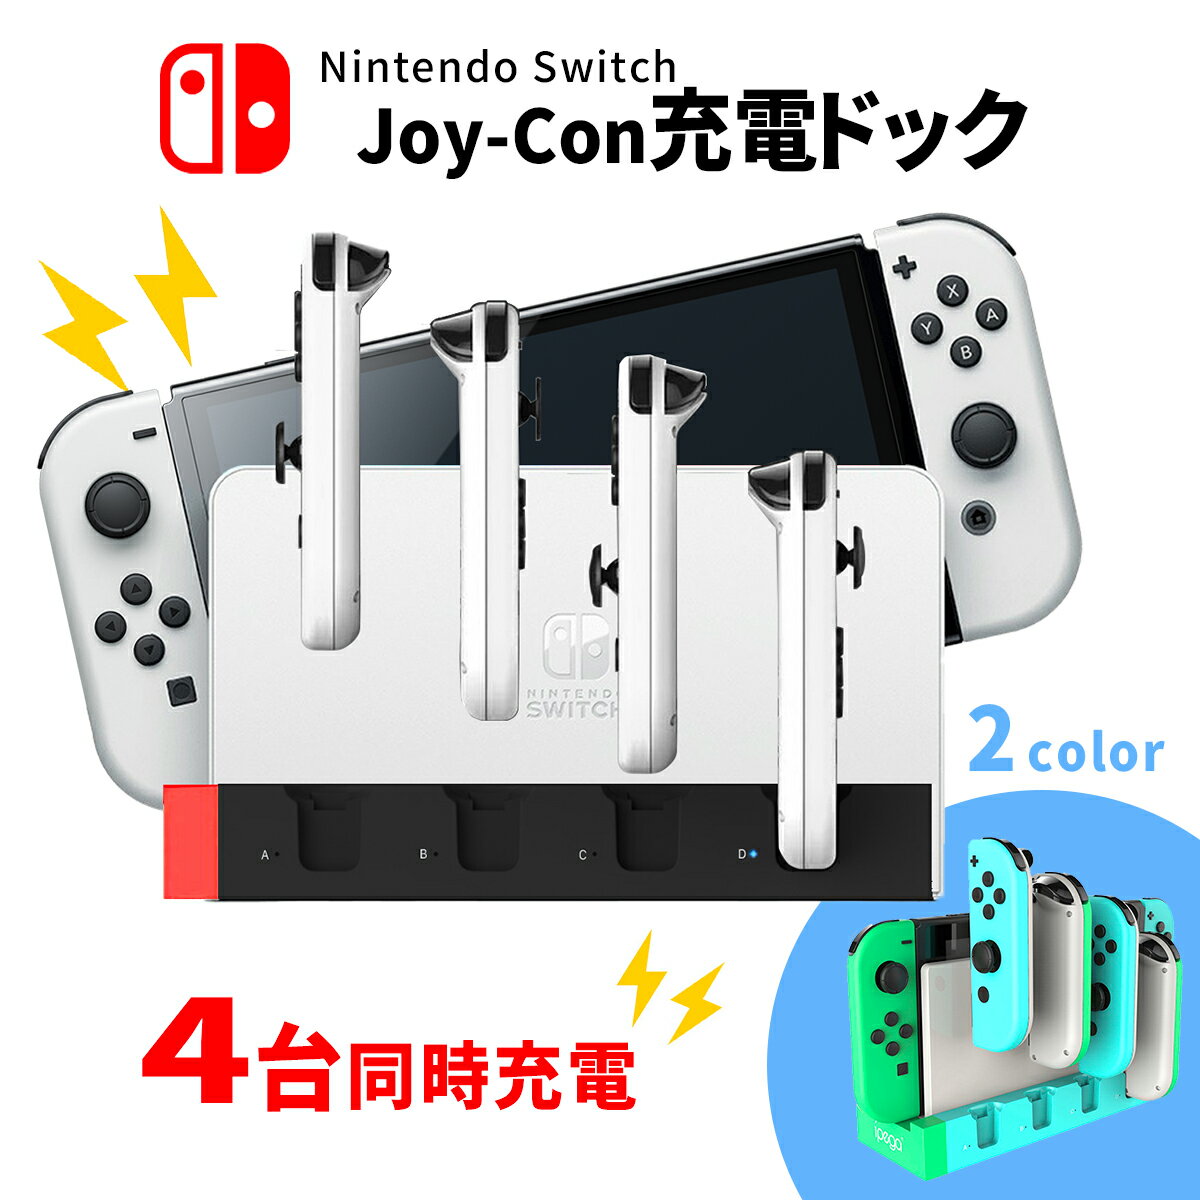 Nintendo Switch 充電器 スイッチ 充電 充電器 ジョイコン コントローラー 充電 充電スタンド 純正 Joy-Con ジョイコン 充電 アダプター コントローラー 収納 任天堂 スイッチ本体に差し込むだけ 本体 簡単接続 ジョイコン充電器 充電ドック 有機ELモデル 対応 4台 2台 同時